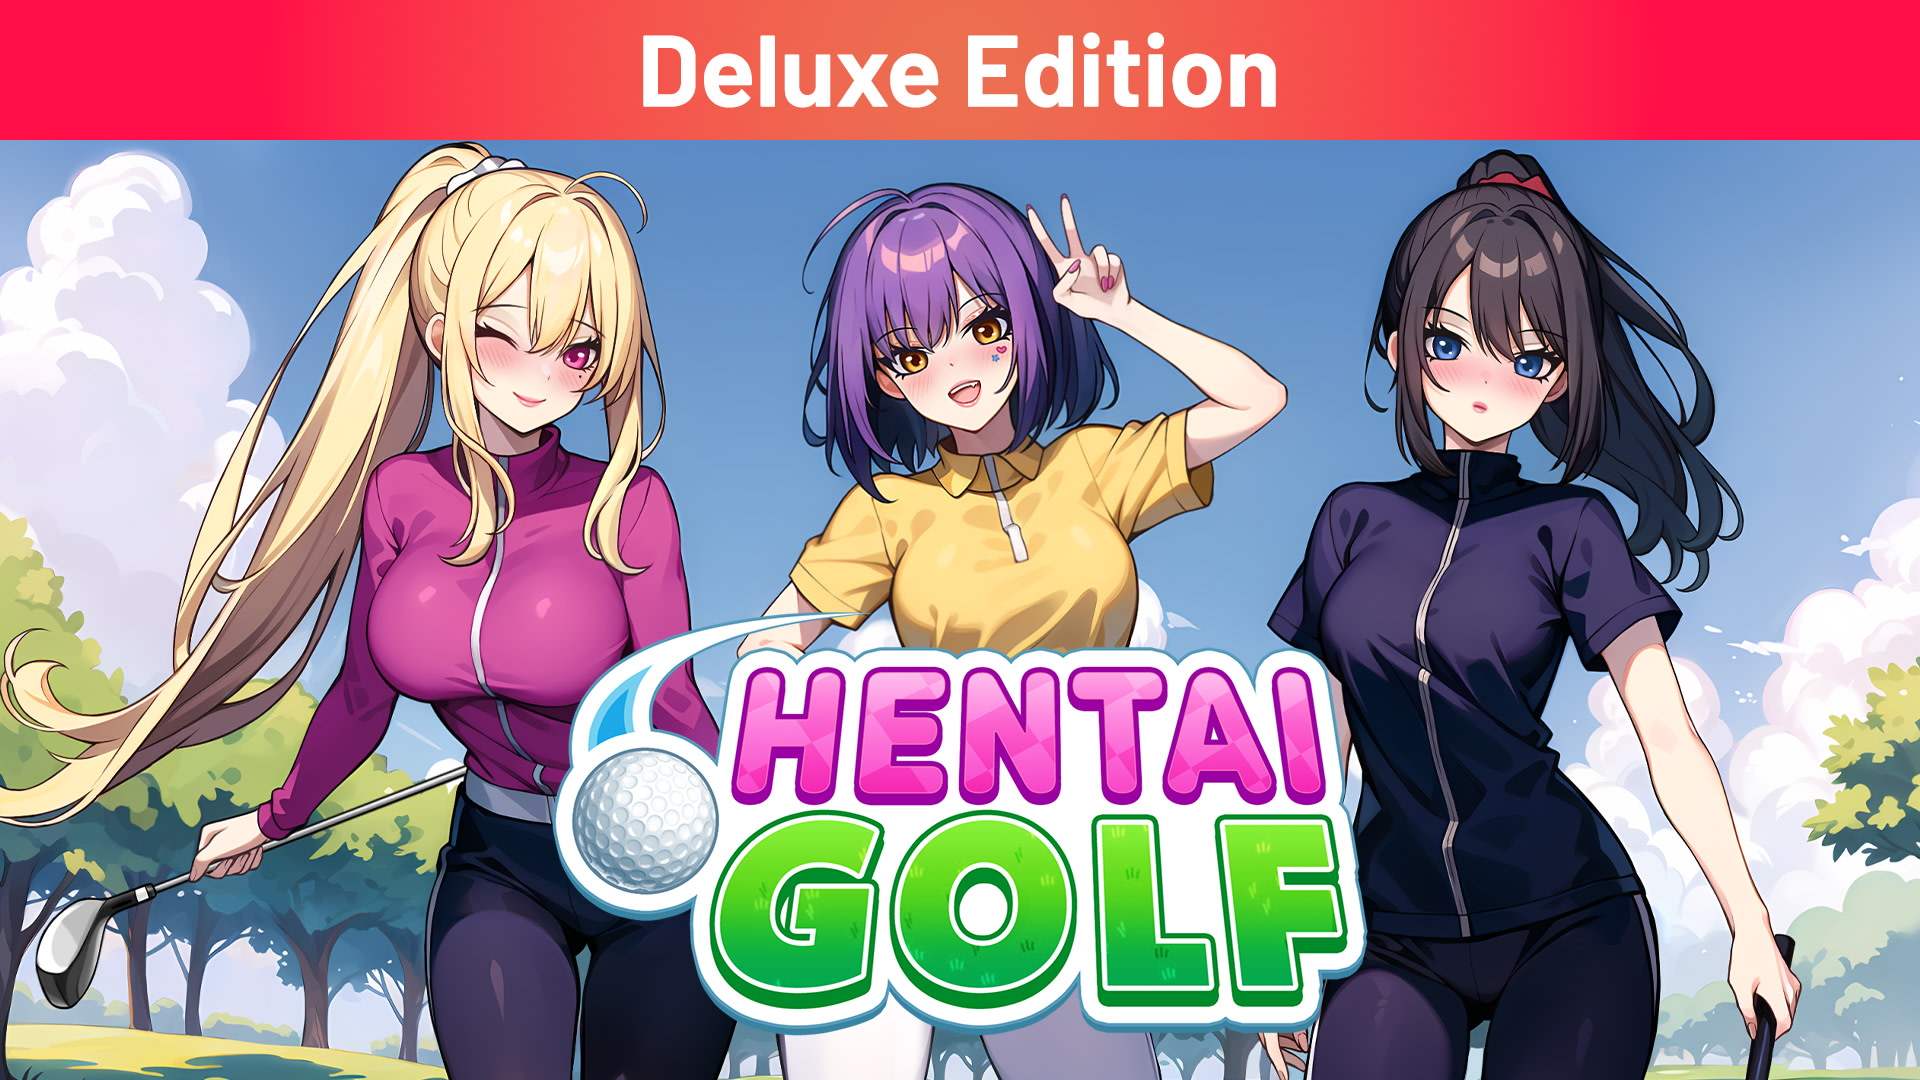 Hentai Golf Deluxe Edition